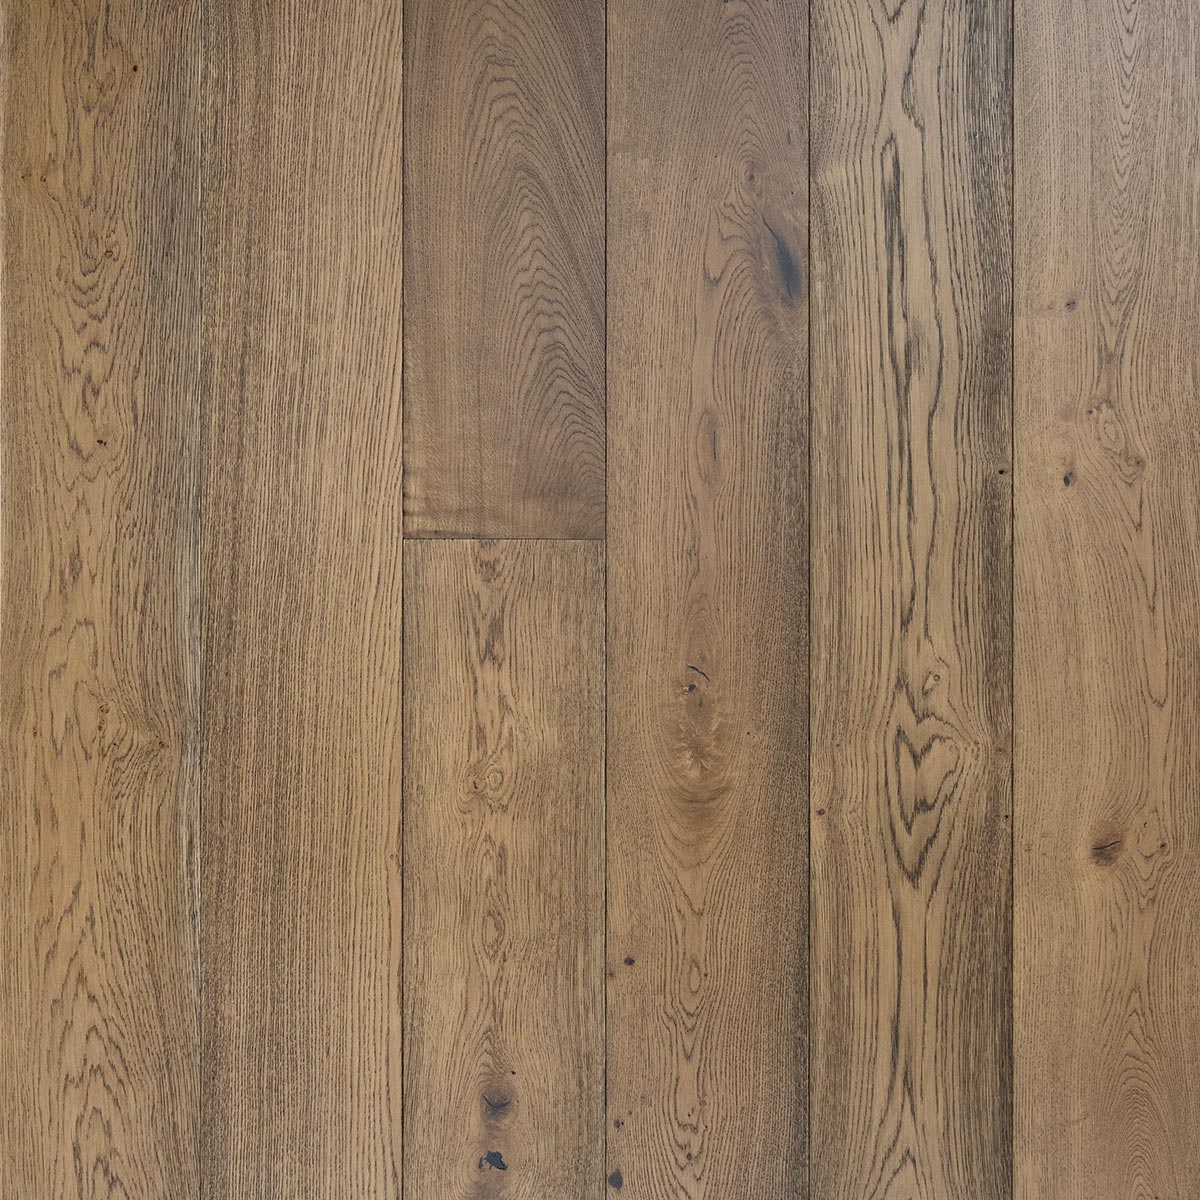 Multiply oak wood flooring named Cambridge Cinnamon